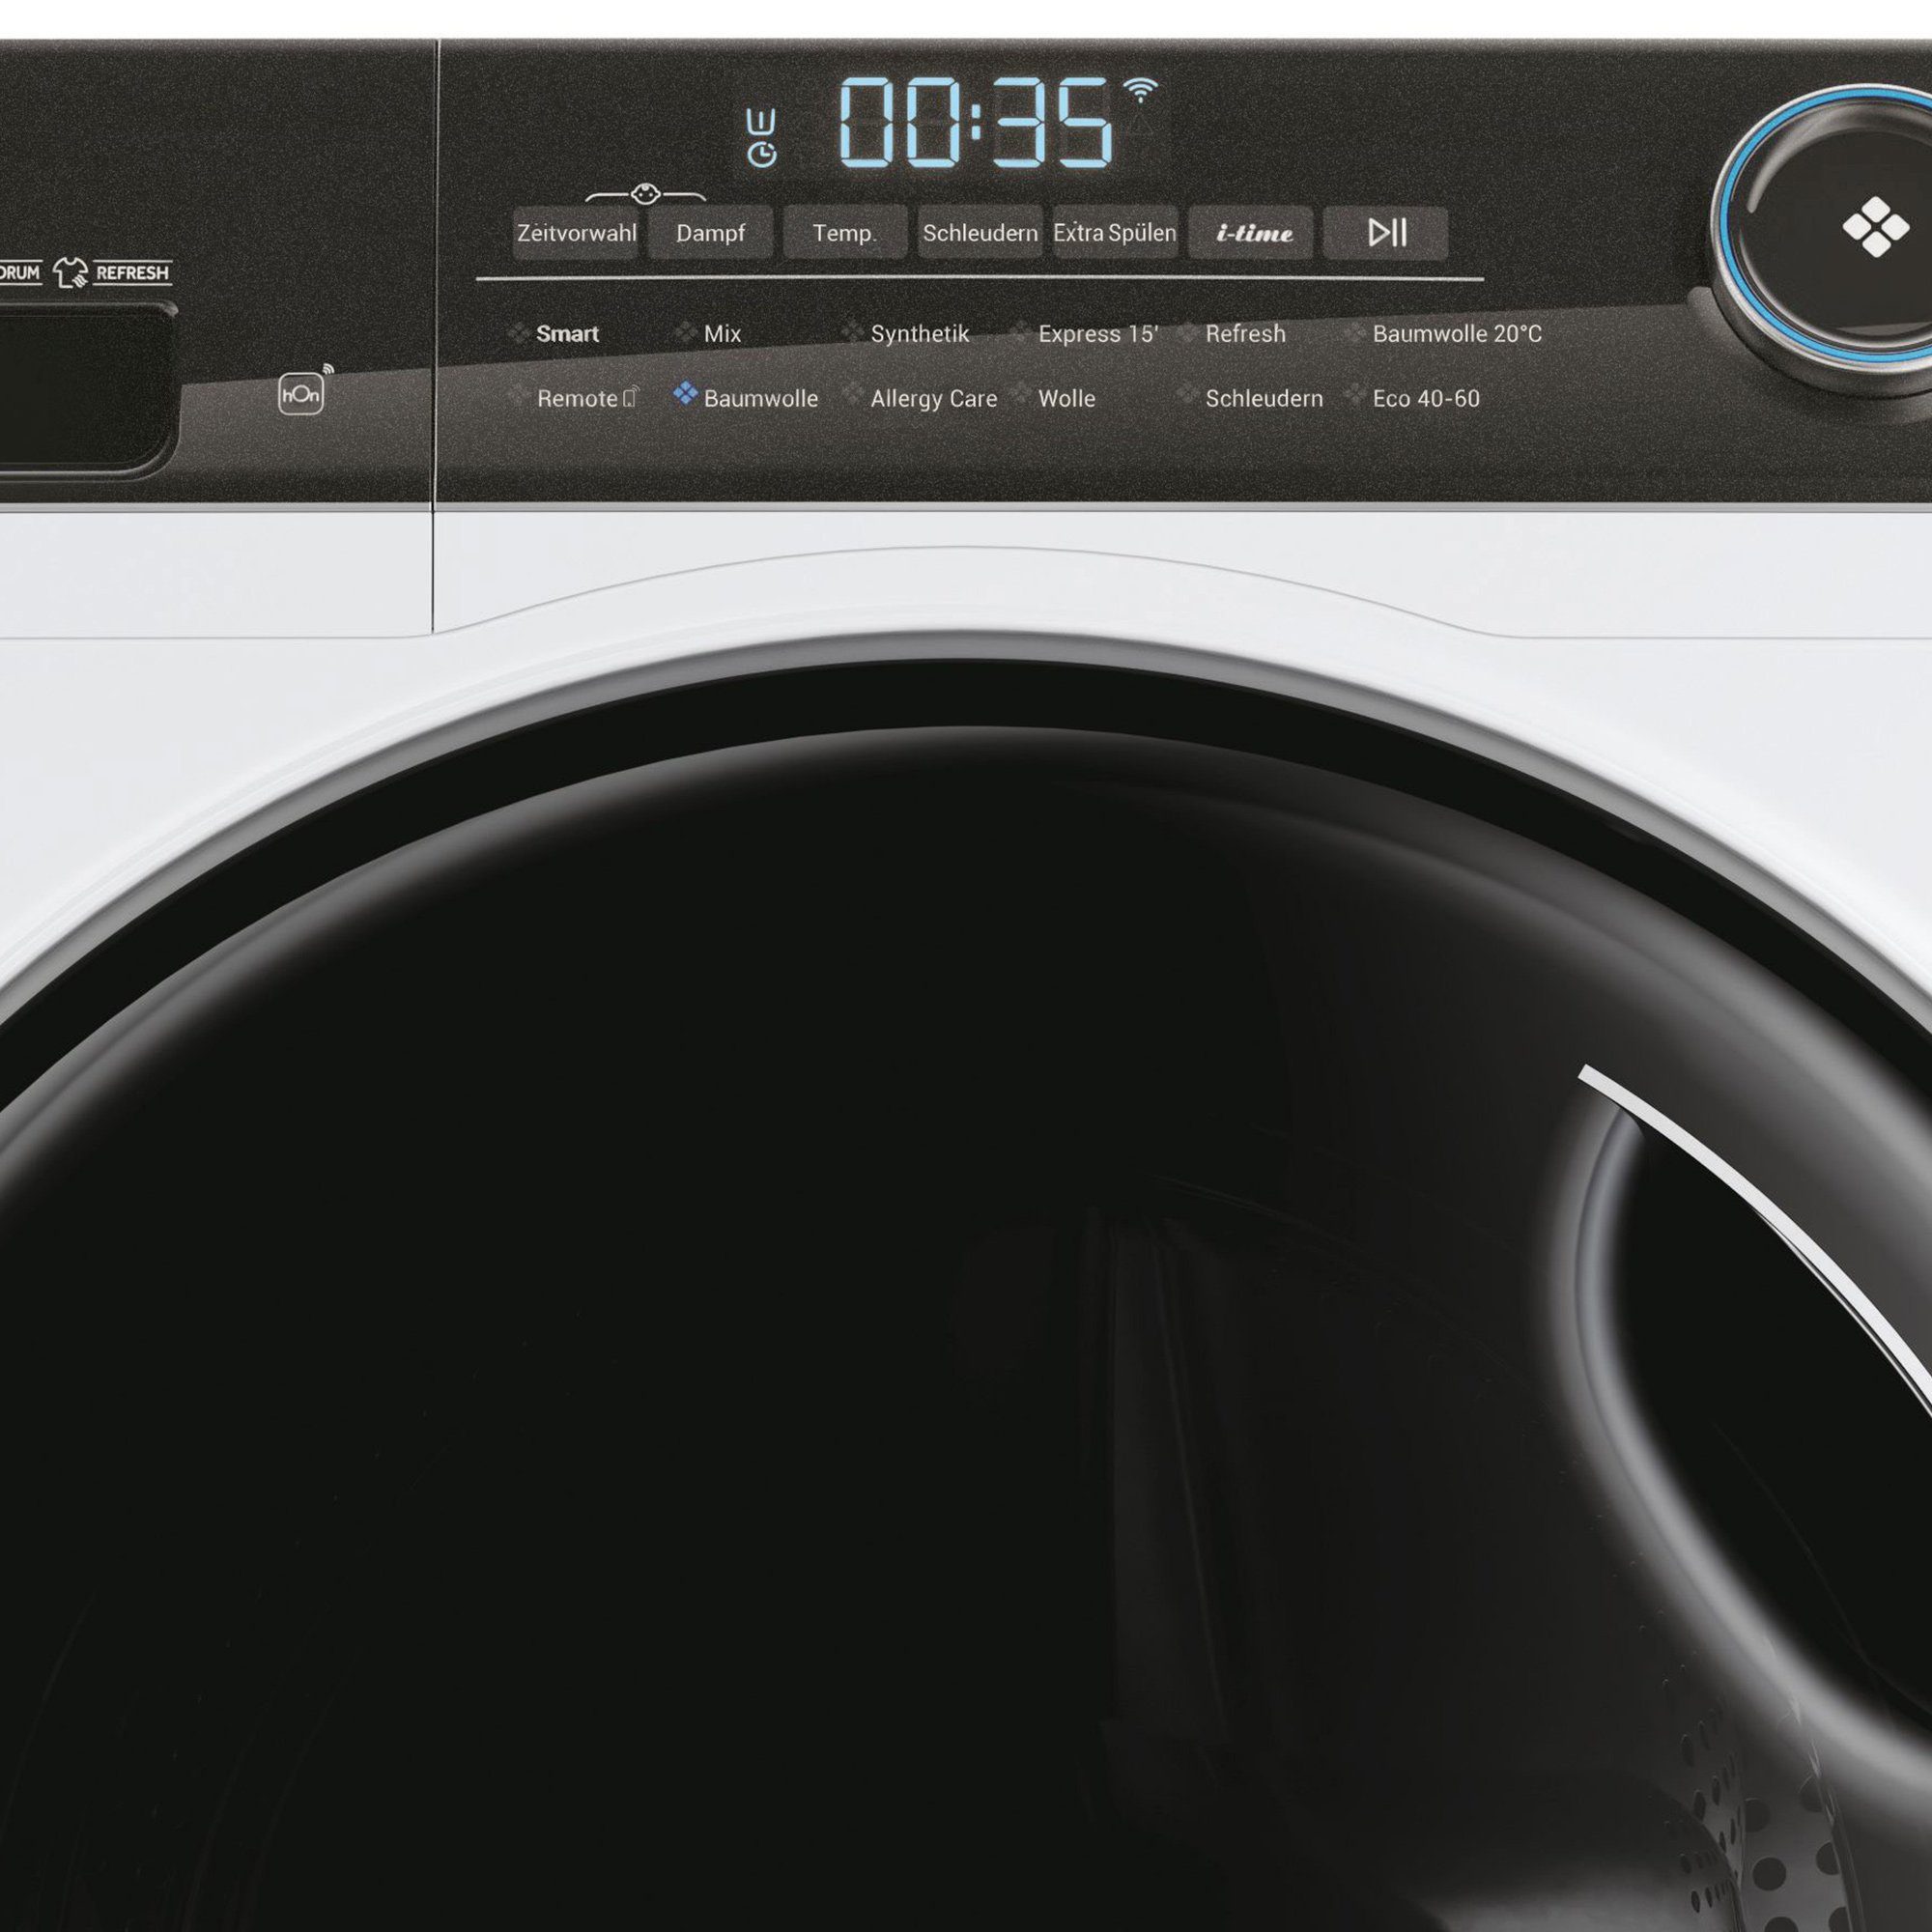 U/min, Refres i-Time, 1400 Haier HW90-B14TEAM5, kg, App, 9,00 Waschmaschine Smart hOn